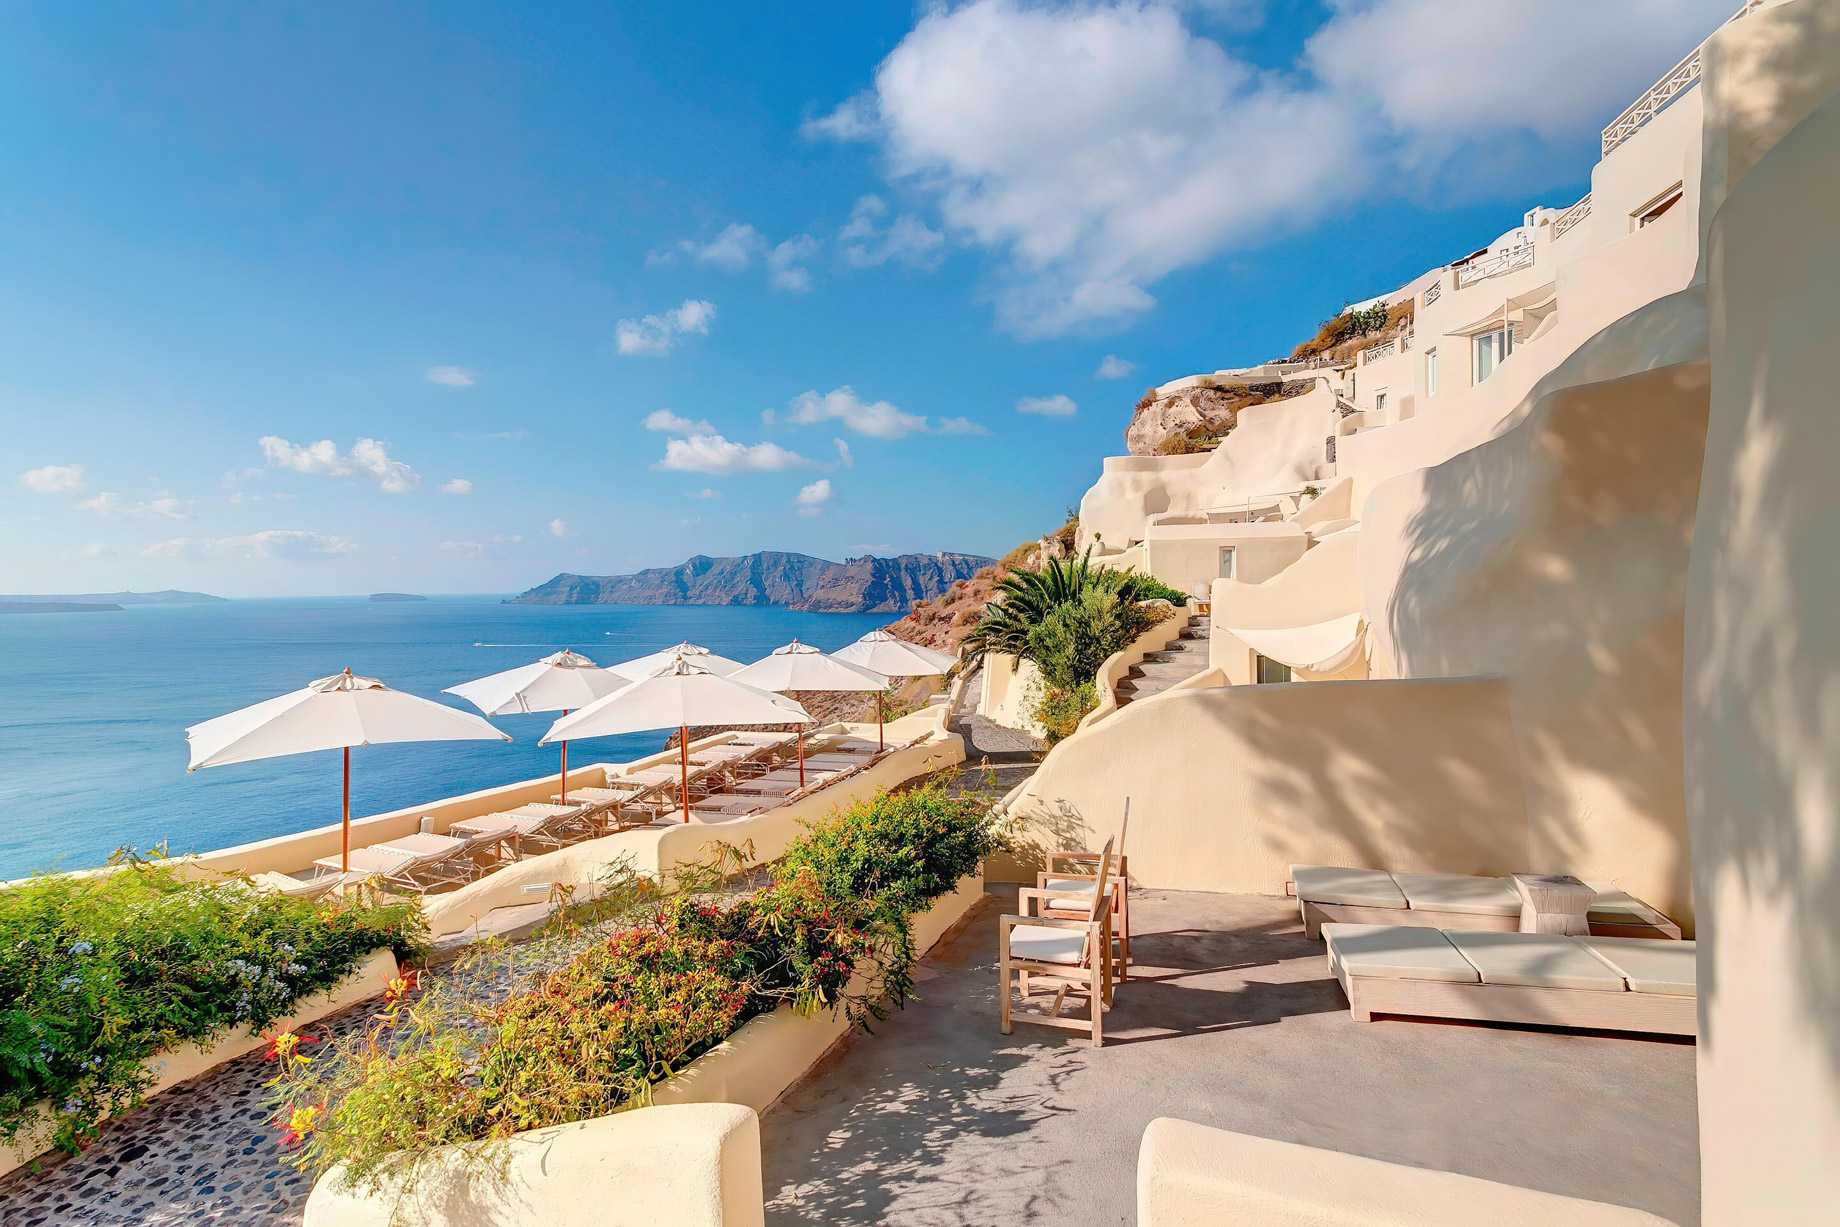 Mystique Hotel Santorini – Oia, Santorini Island, Greece – Clifftop Ocean View Decks